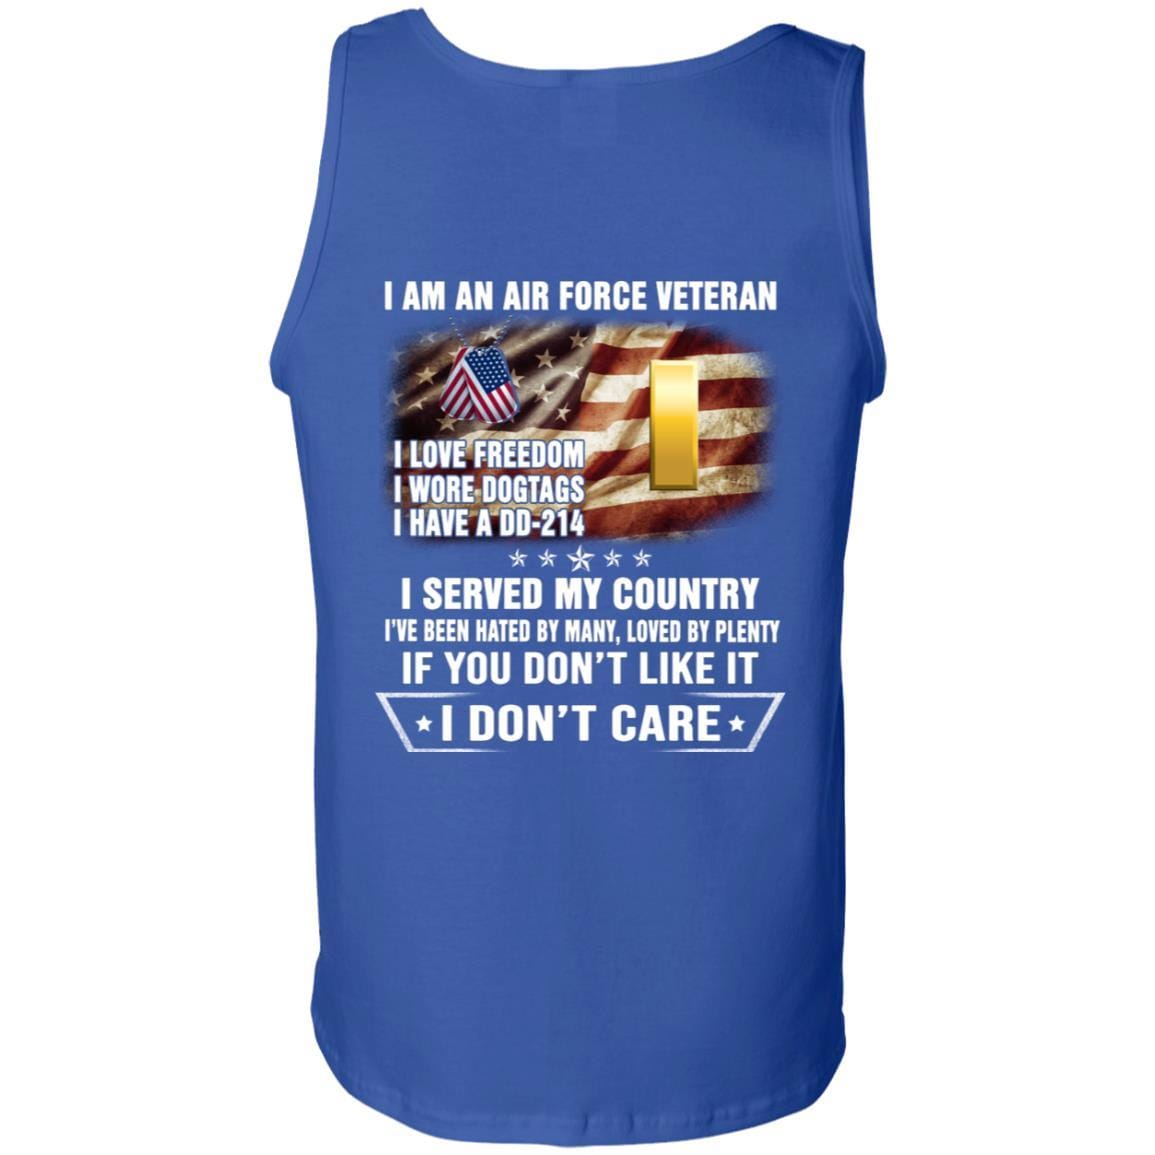 I Am An Air Force O-1 Second Lieutenant 2d Lt O1 Commissioned Officer Ranks Veteran T-Shirt On Back-TShirt-USAF-Veterans Nation